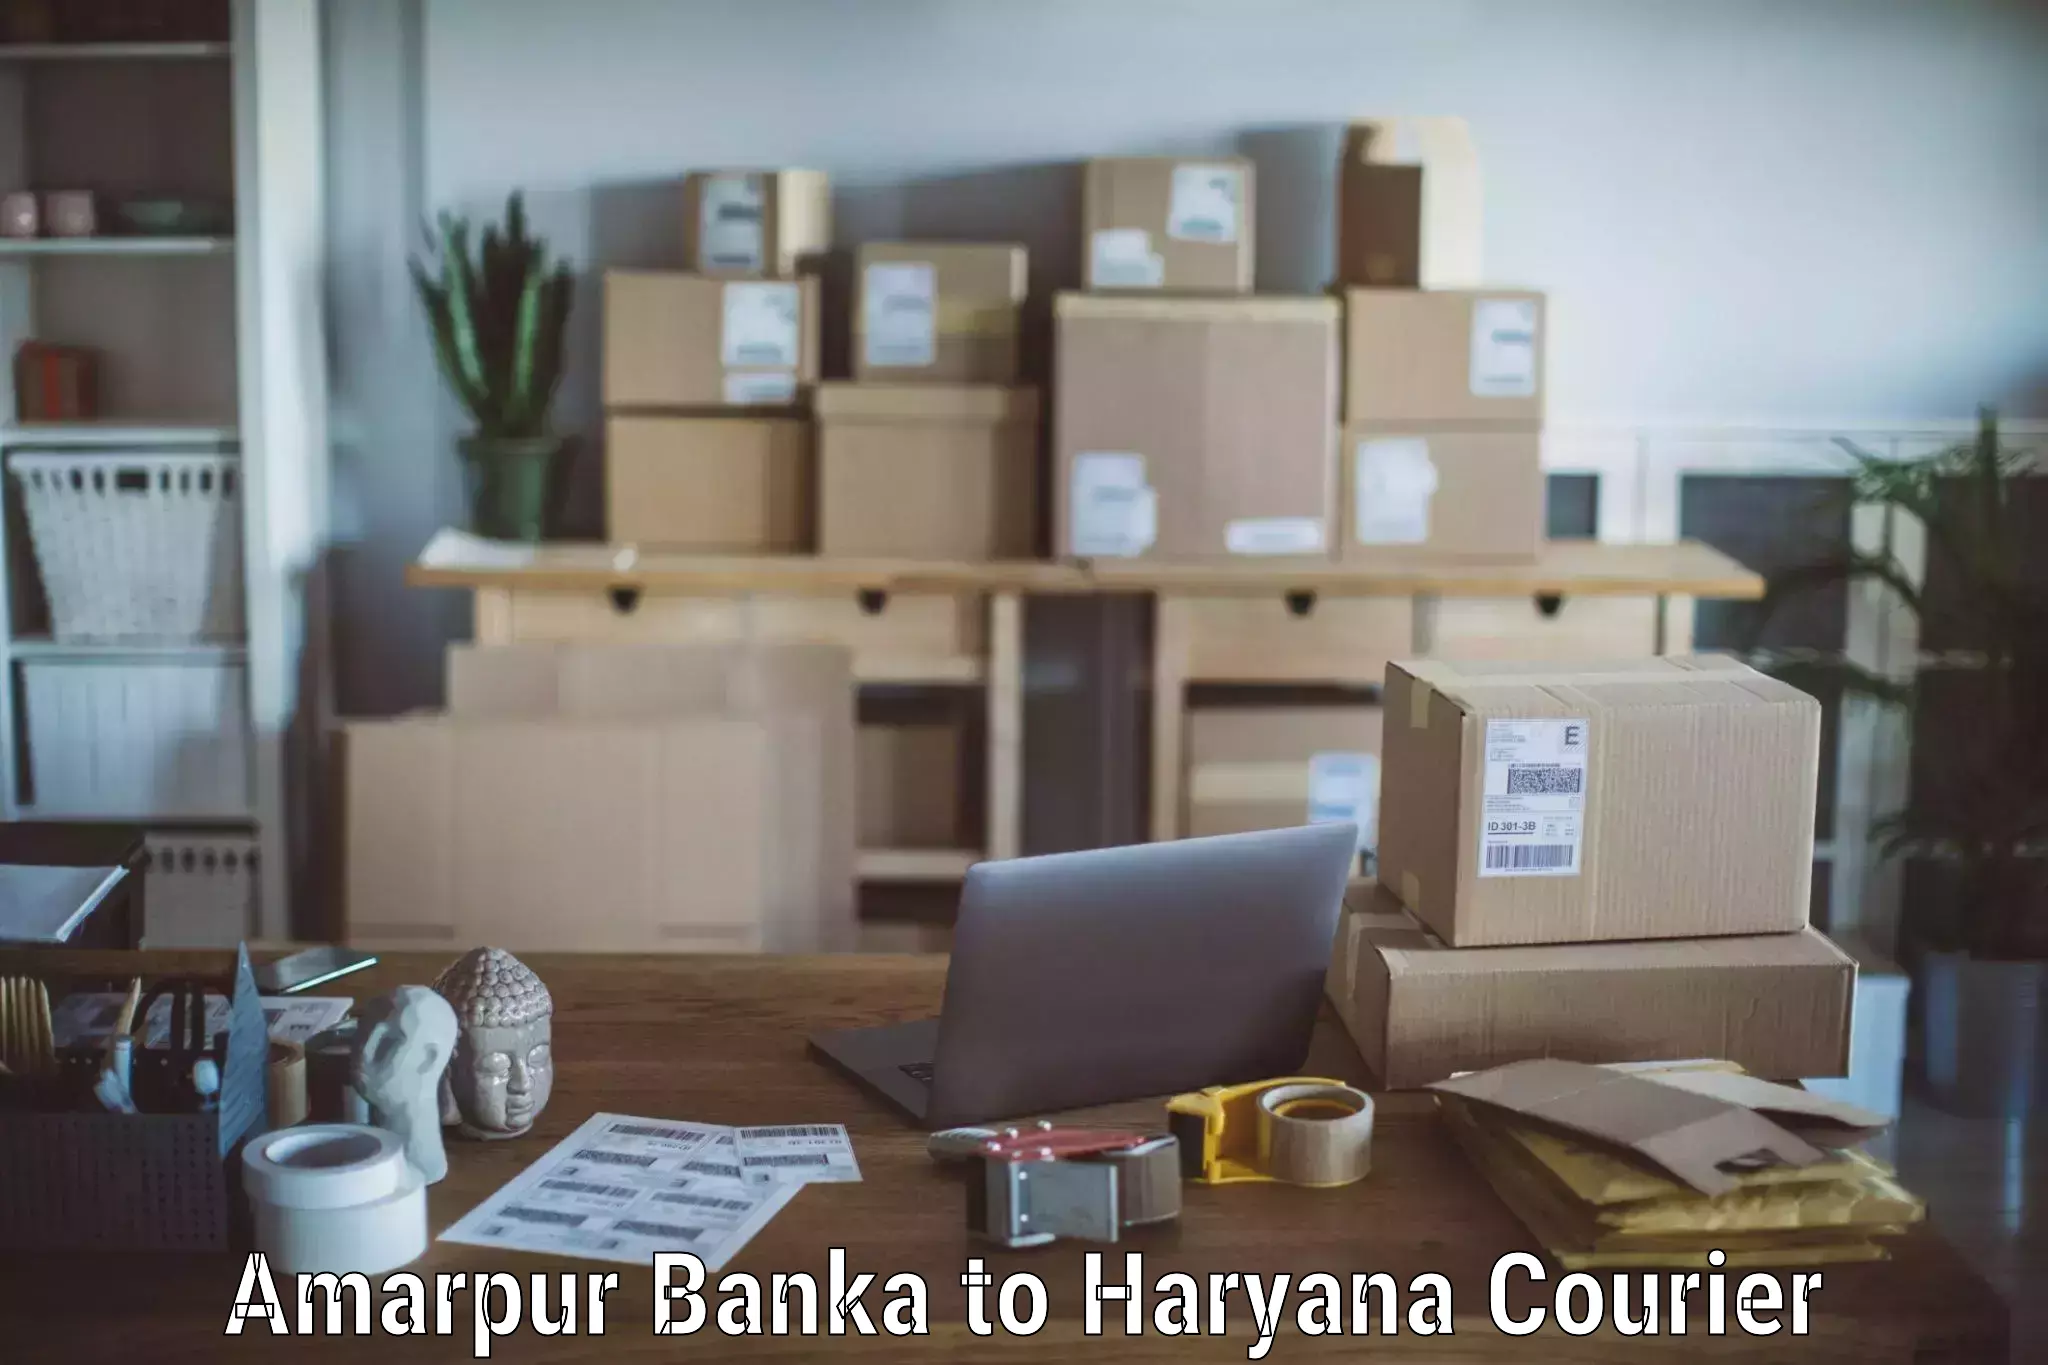 Professional moving company Amarpur Banka to Charkhari